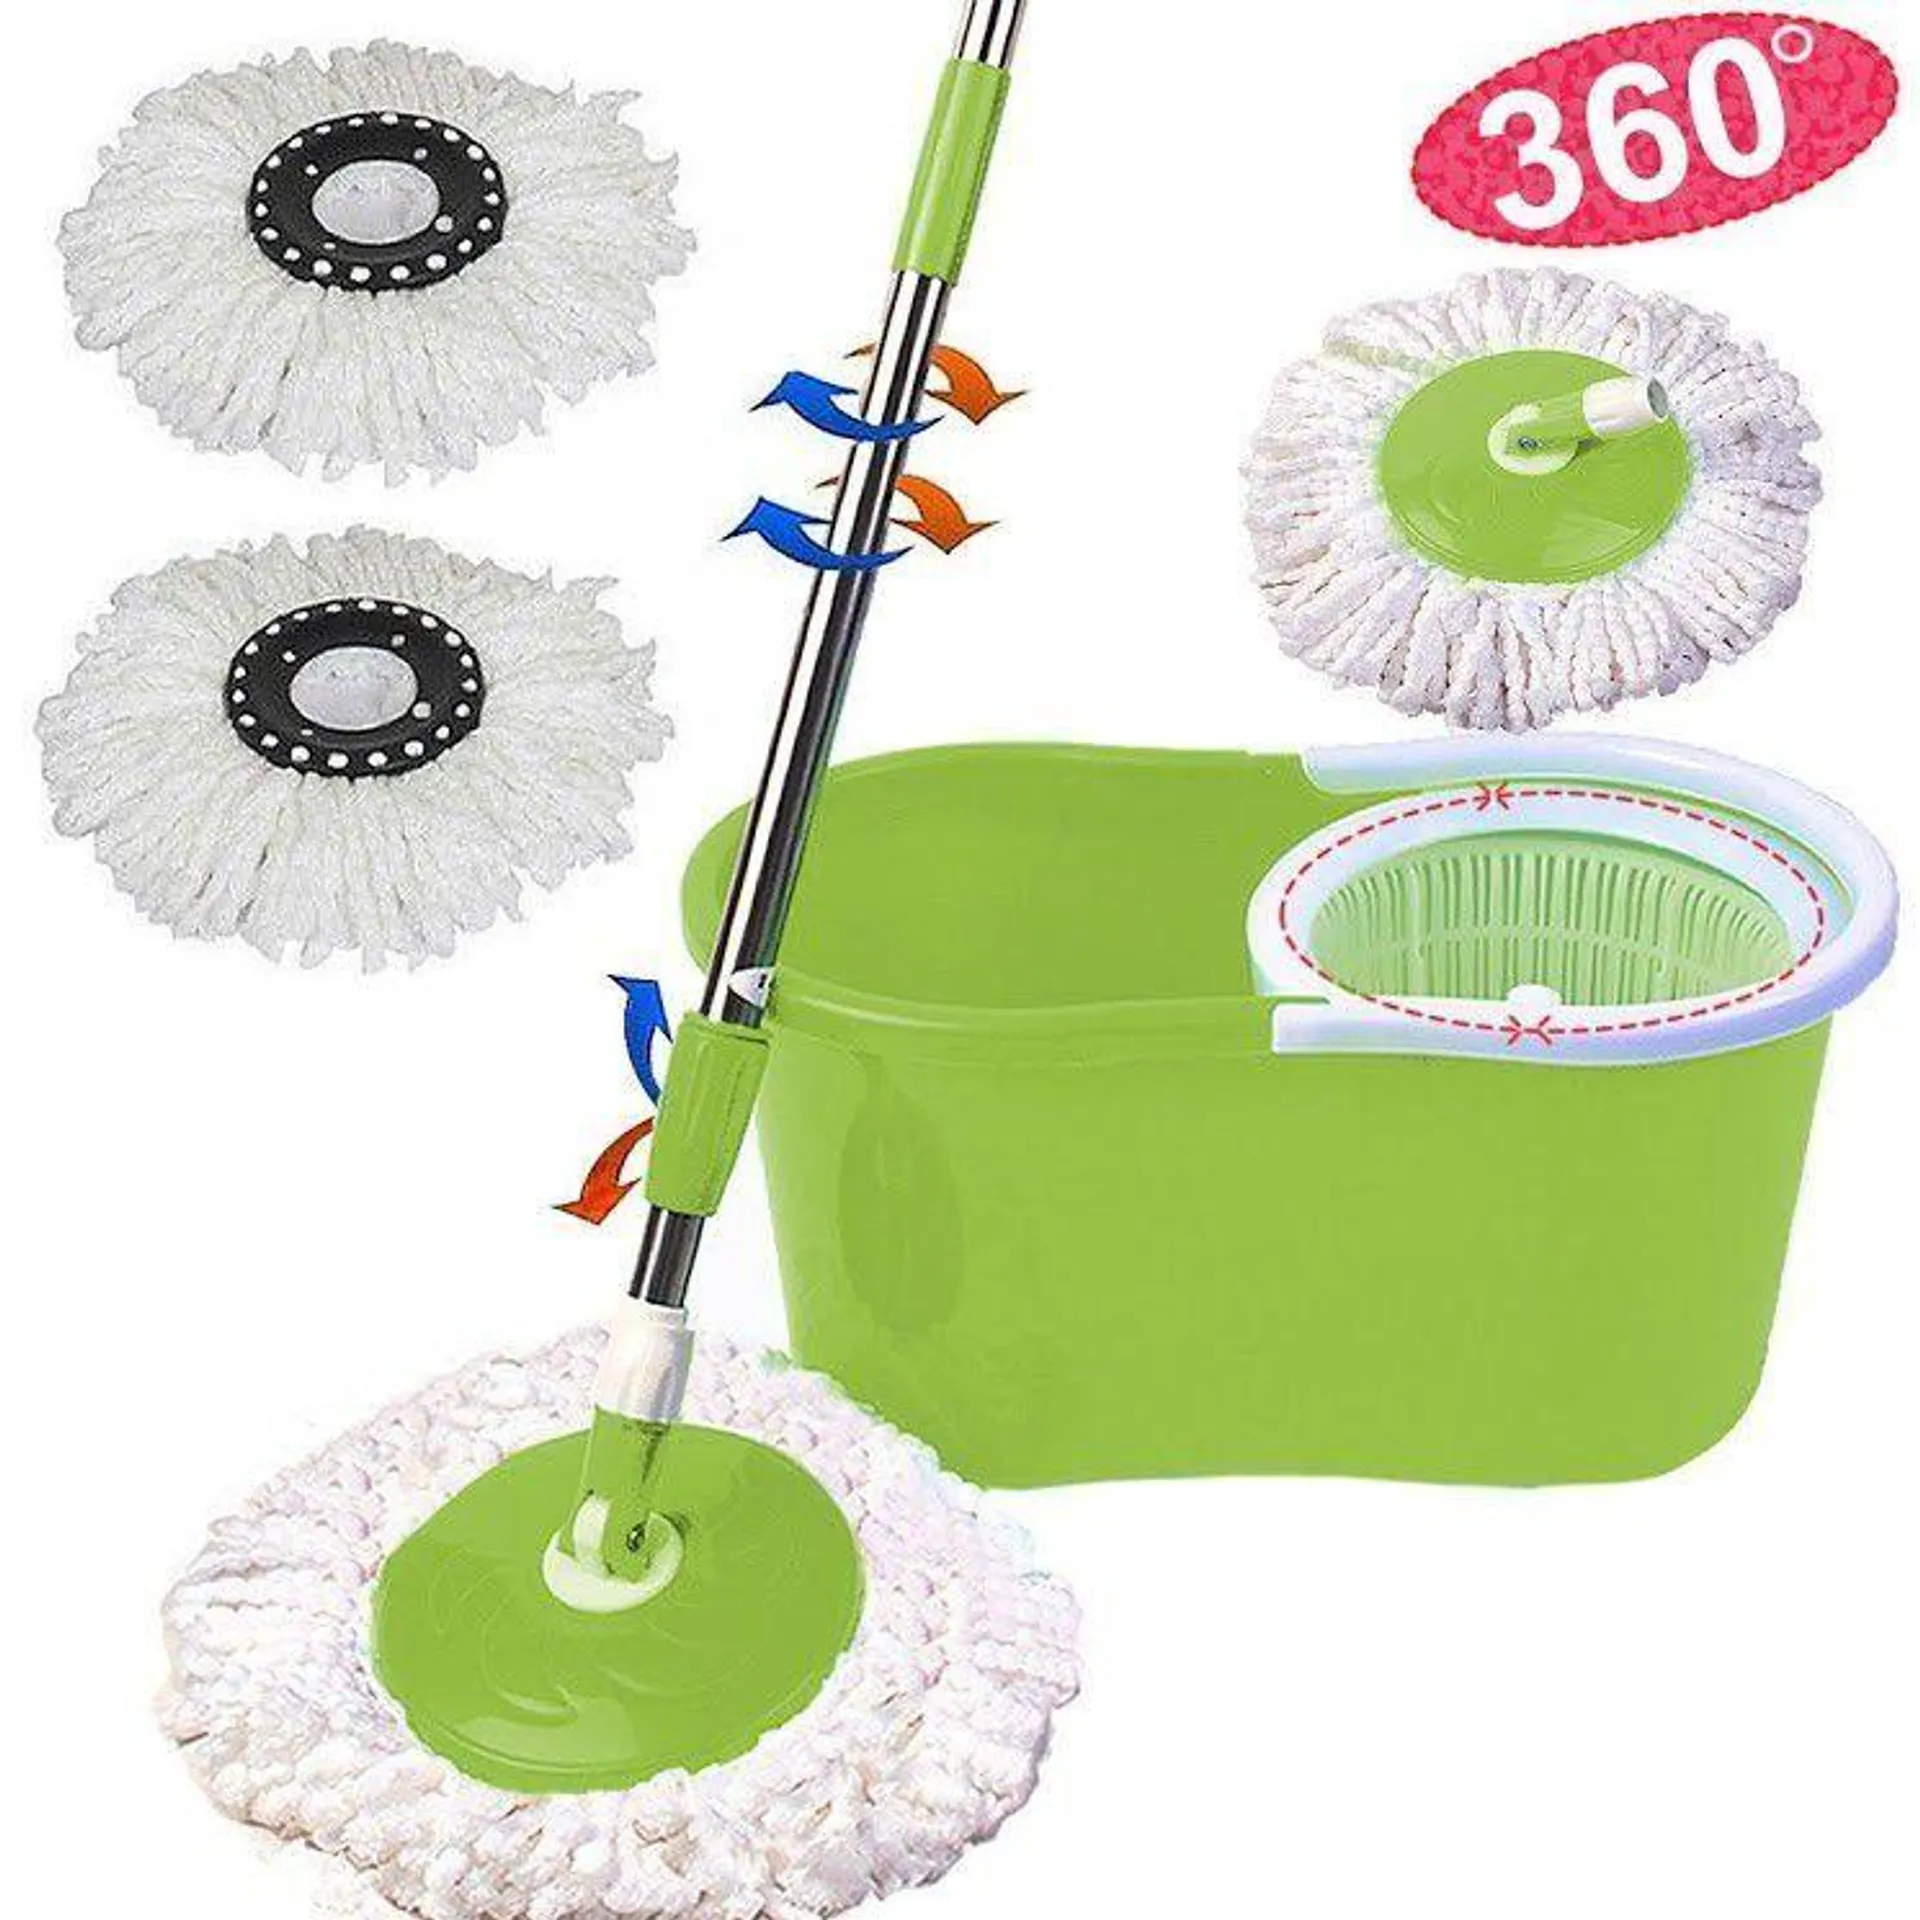 Rotating 360° Magic Spin Mop And Plastic Bucket Set-Green - Blue